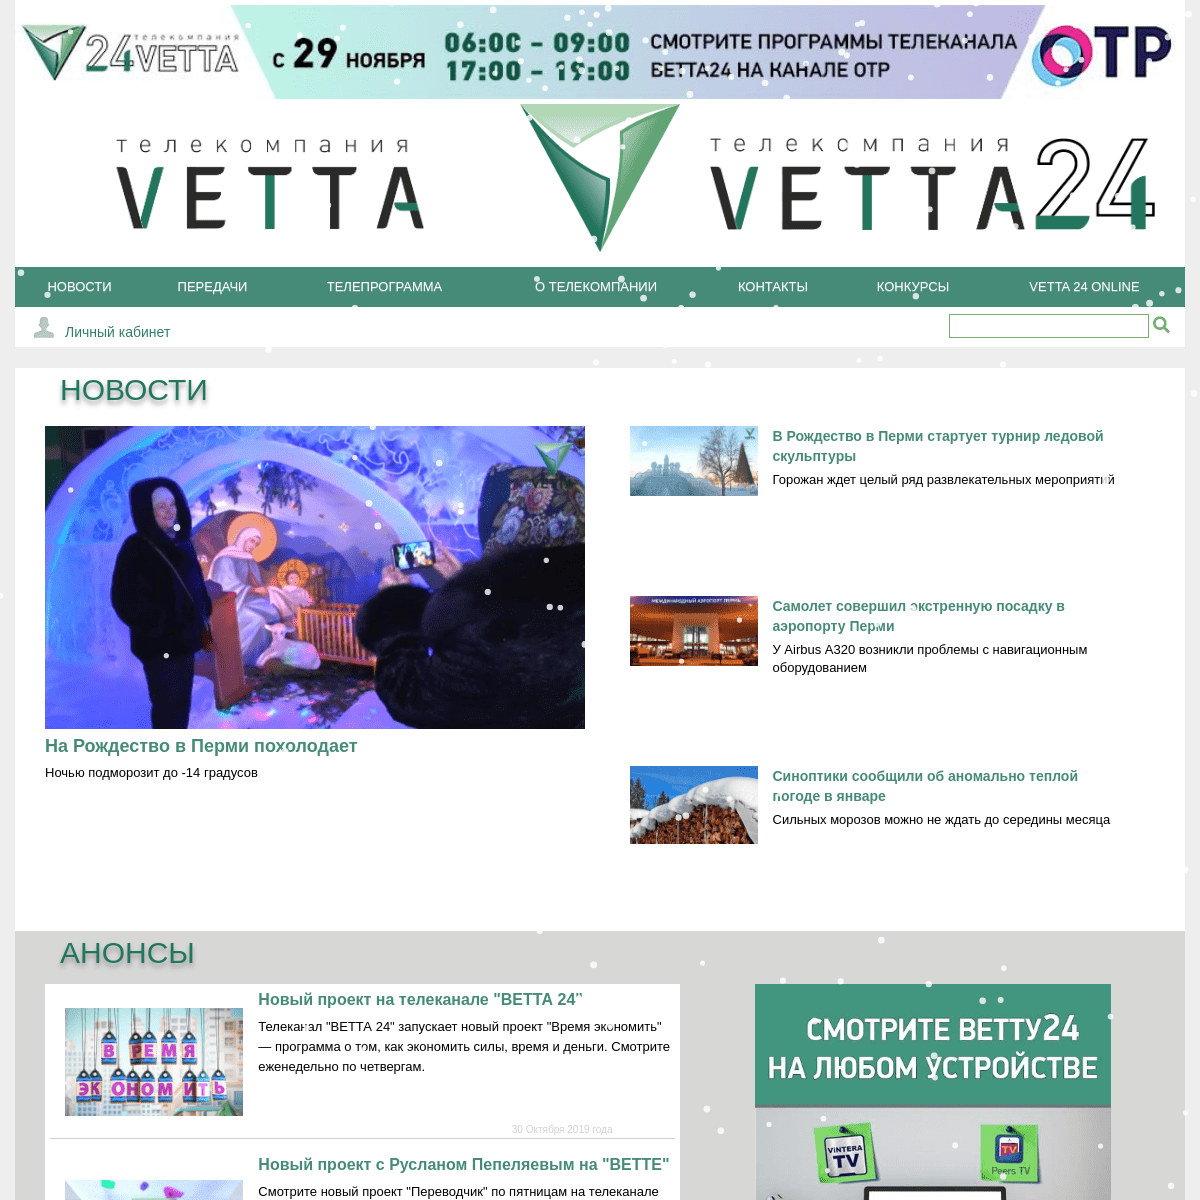 A complete backup of vetta.tv